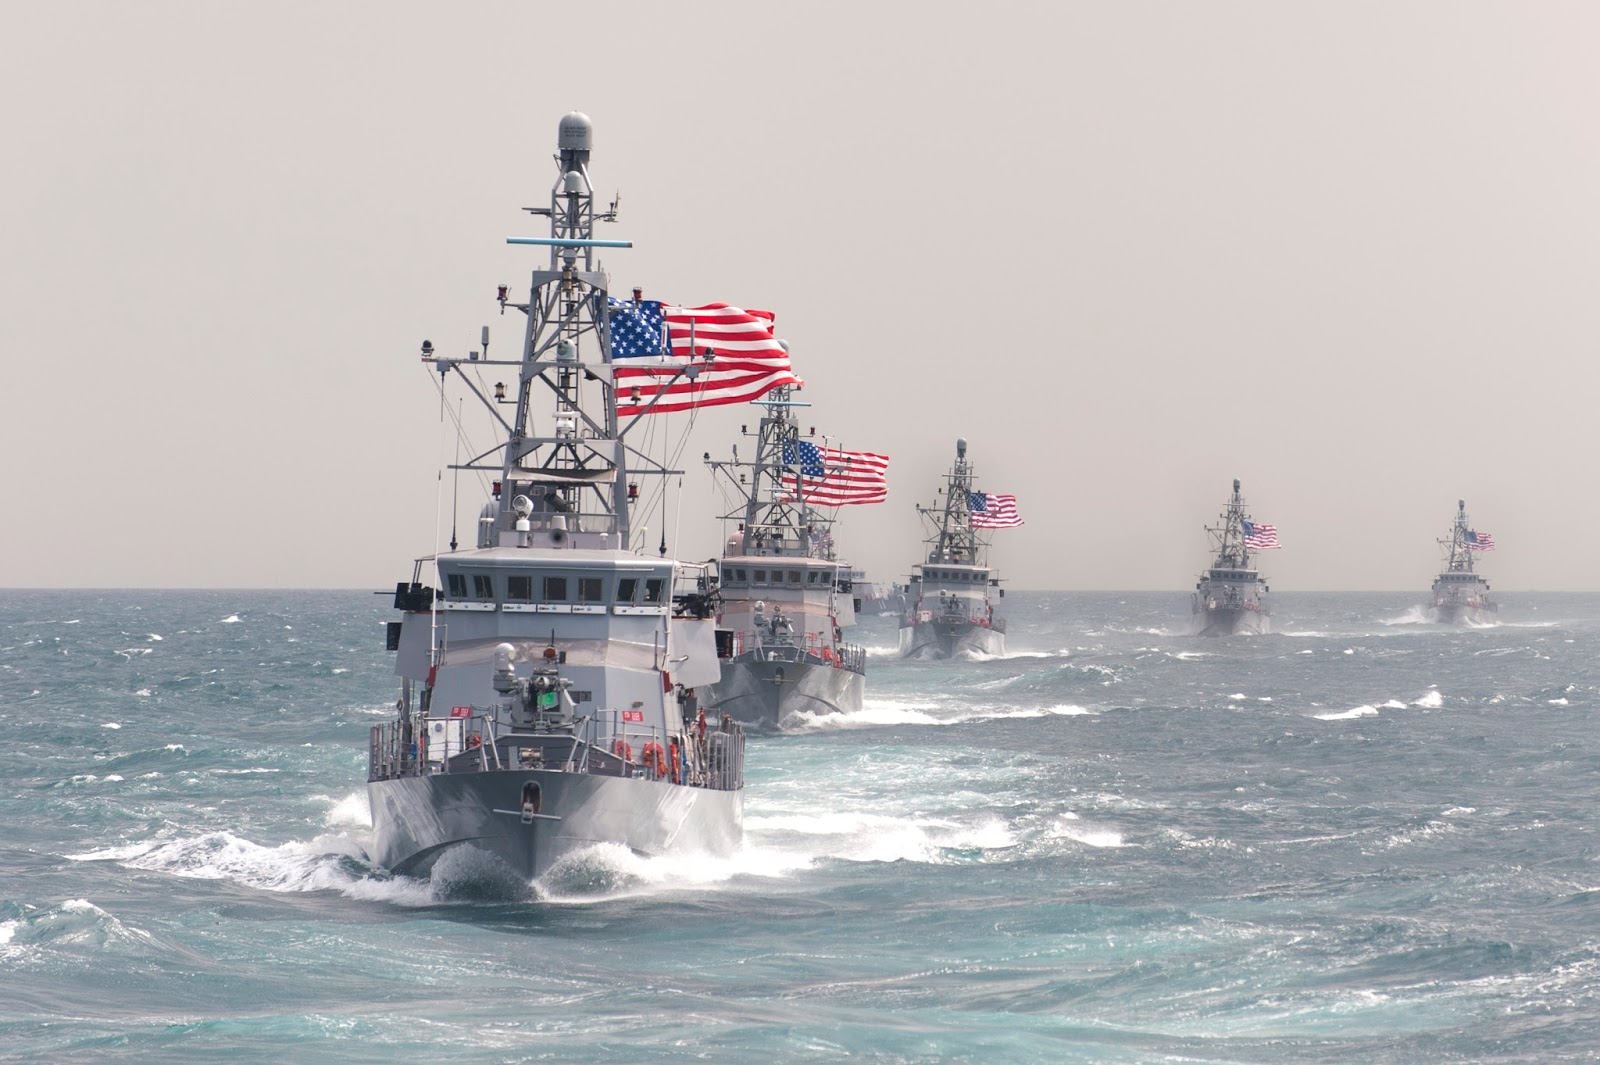 Cyclone-class_patrol_ships_in_the_Persian_Gulf_in_March_2015.JPG